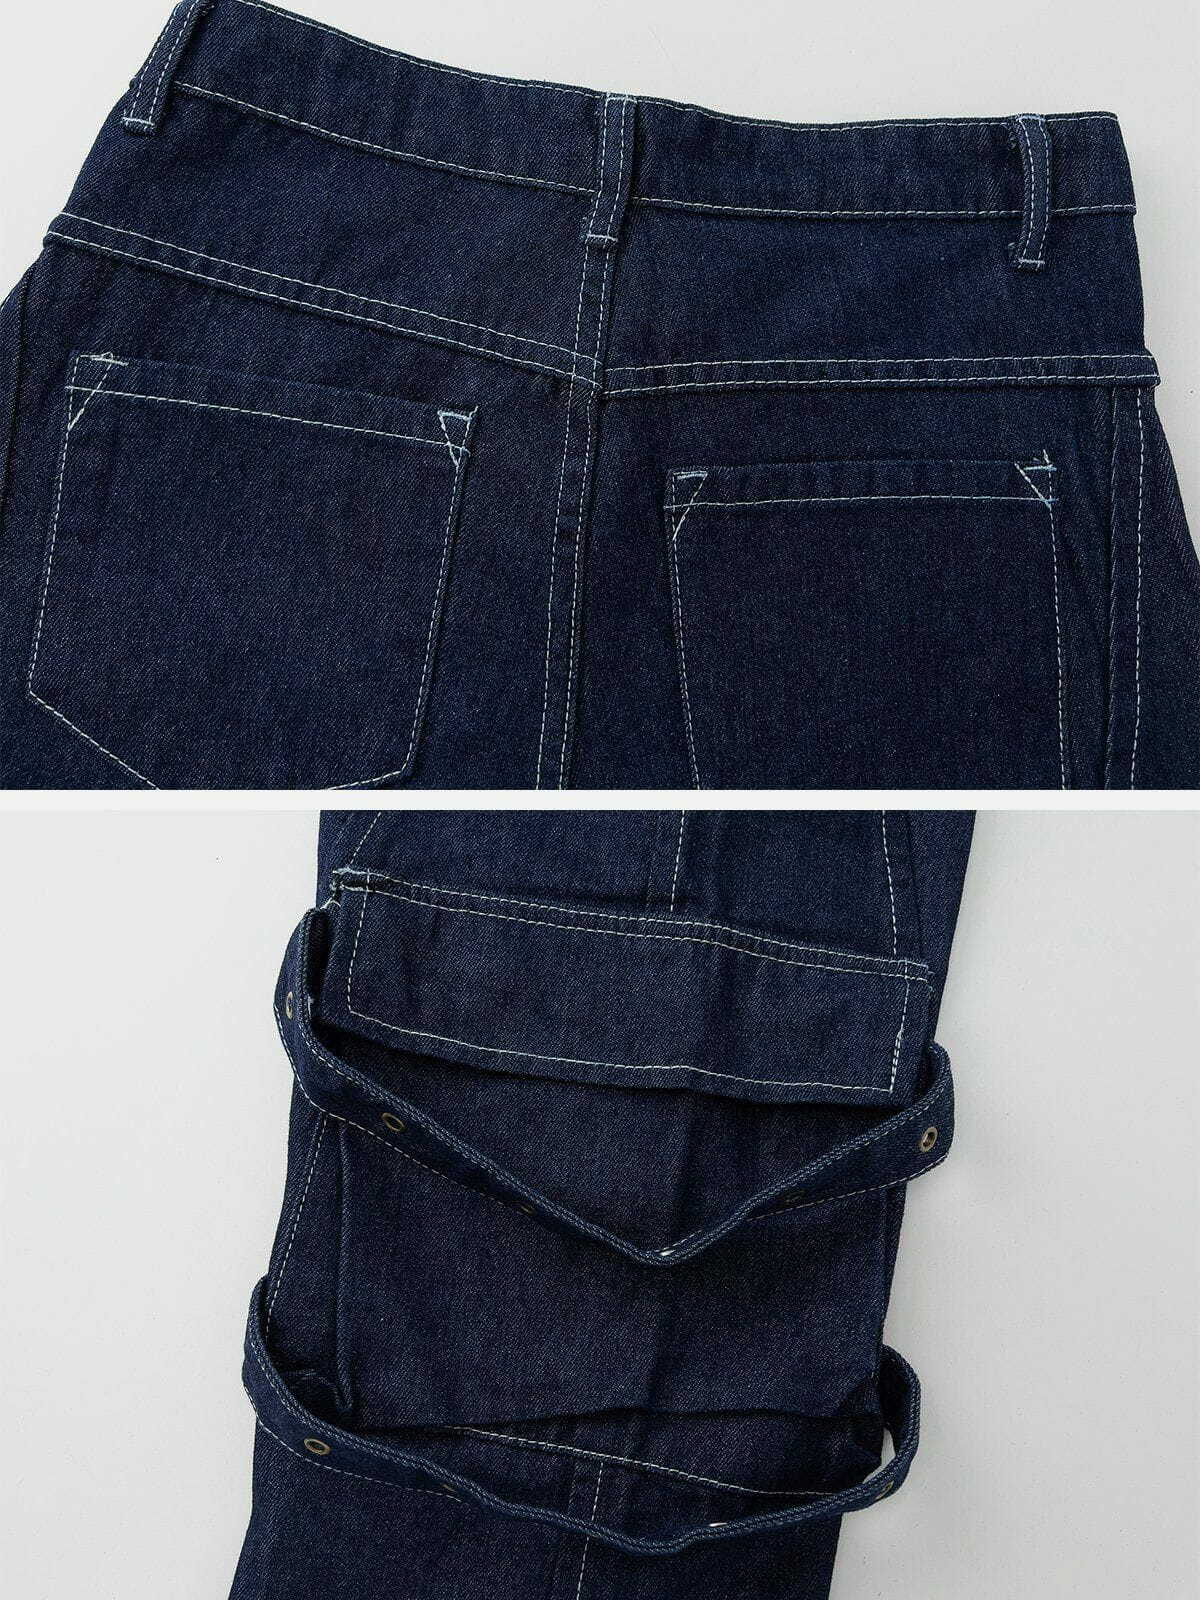 strap detail spliced jeans edgy streetwear essential 2535